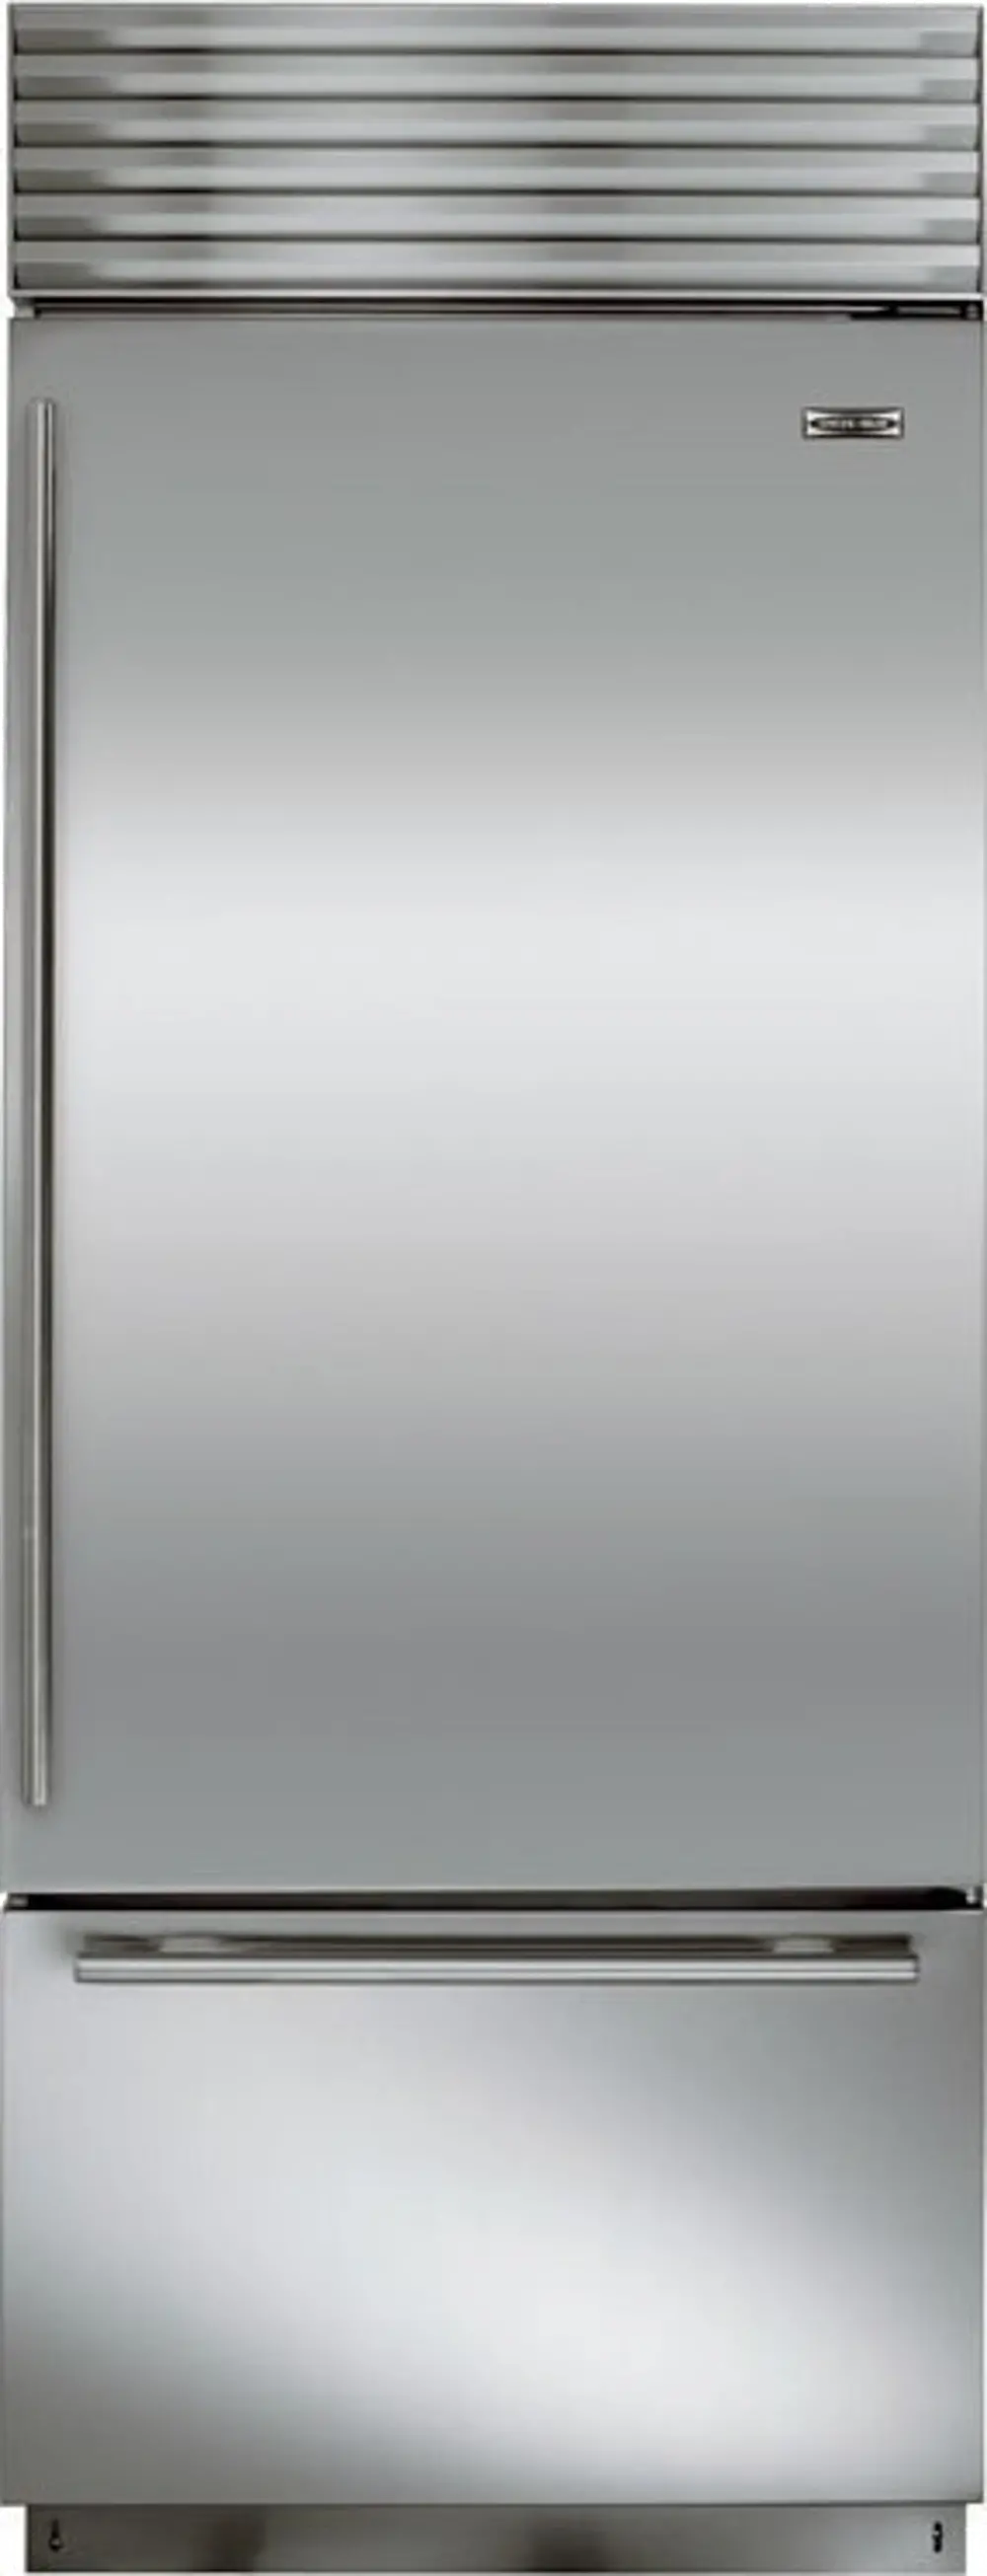 BI-30U/S/TH-RH Sub-Zero 30 Inch Classic Bottom Freezer Refrigerator - Right Hinge-1